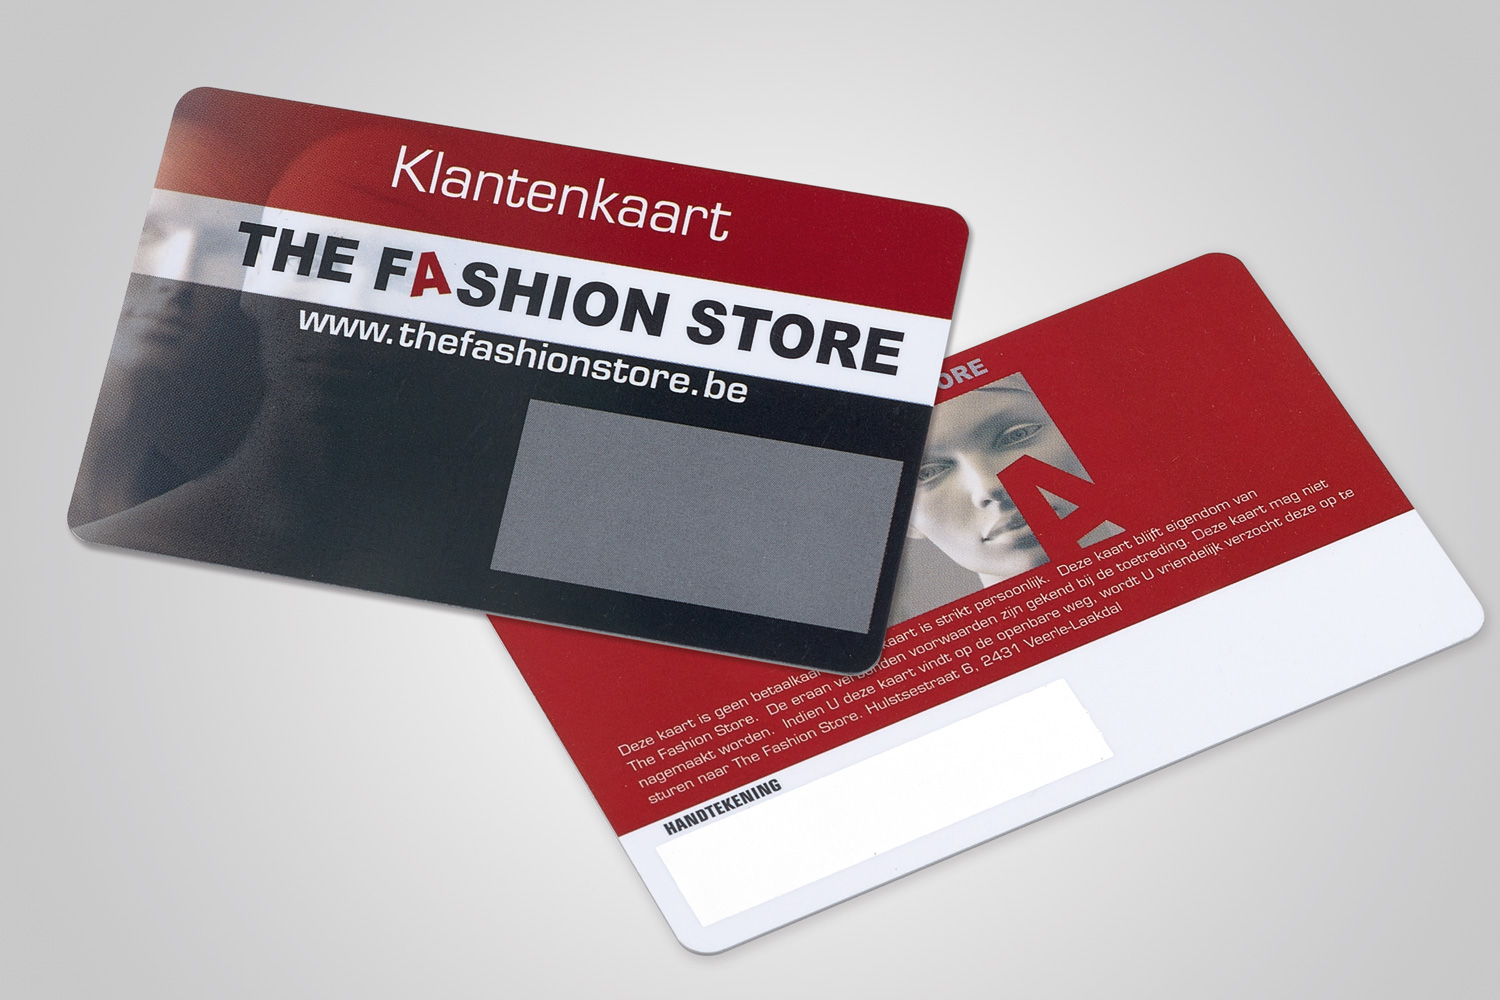 Klantenkaart - The Fashion Store